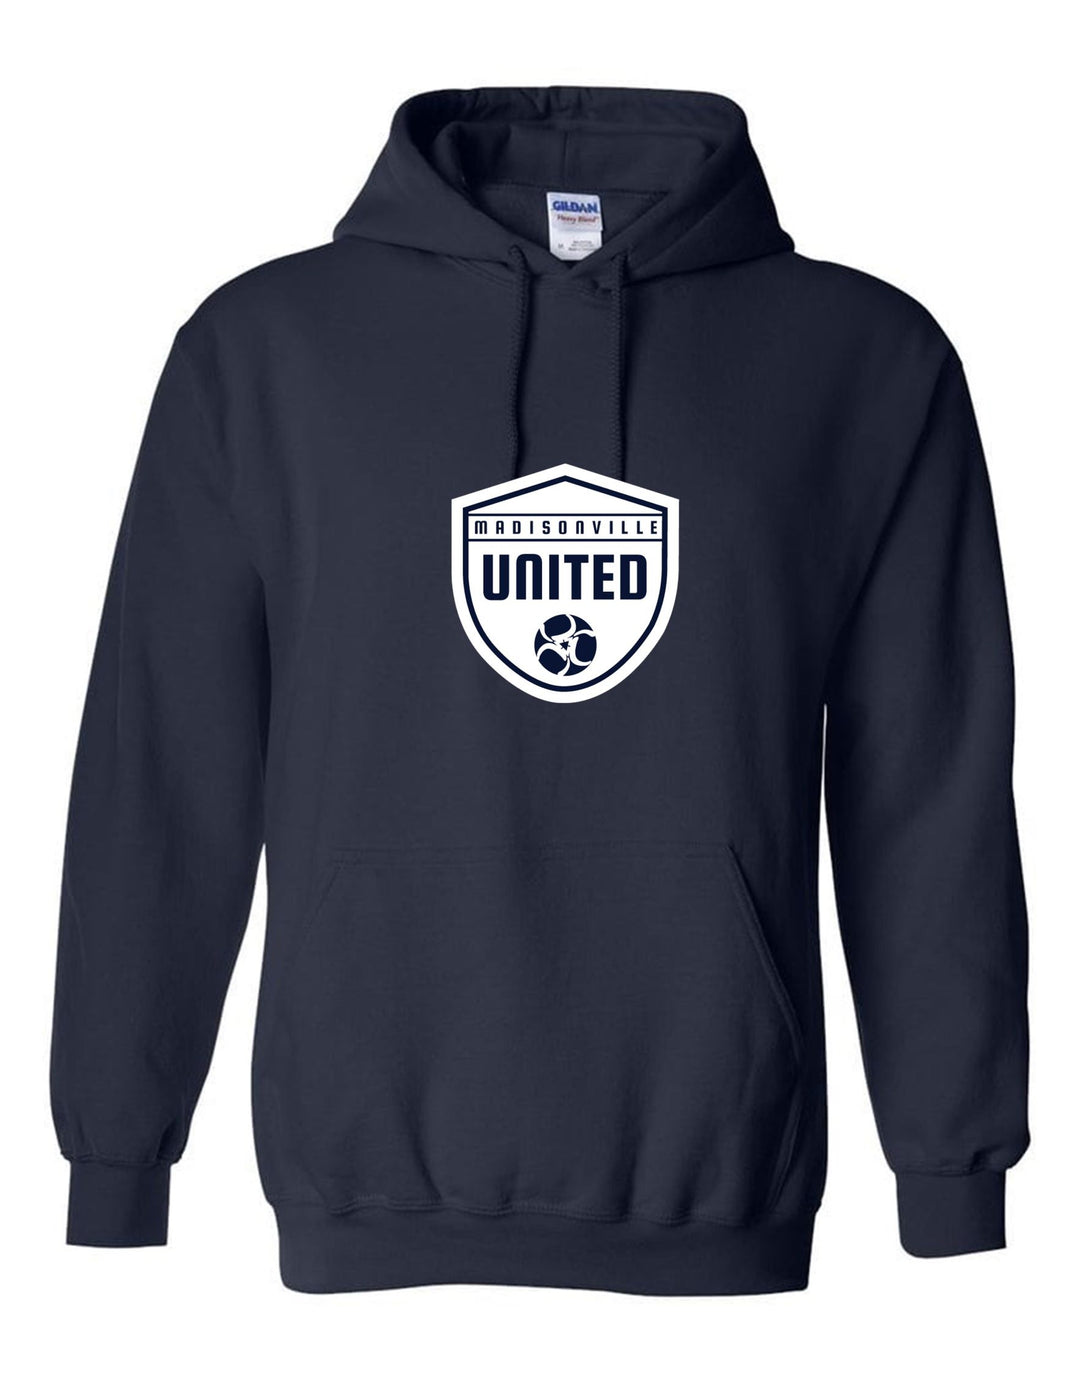 Madidsonville United Hoody - Black, Grey, Navy or White Madisonville United Spiritwear YOUTH MEDIUM NAVY - Third Coast Soccer